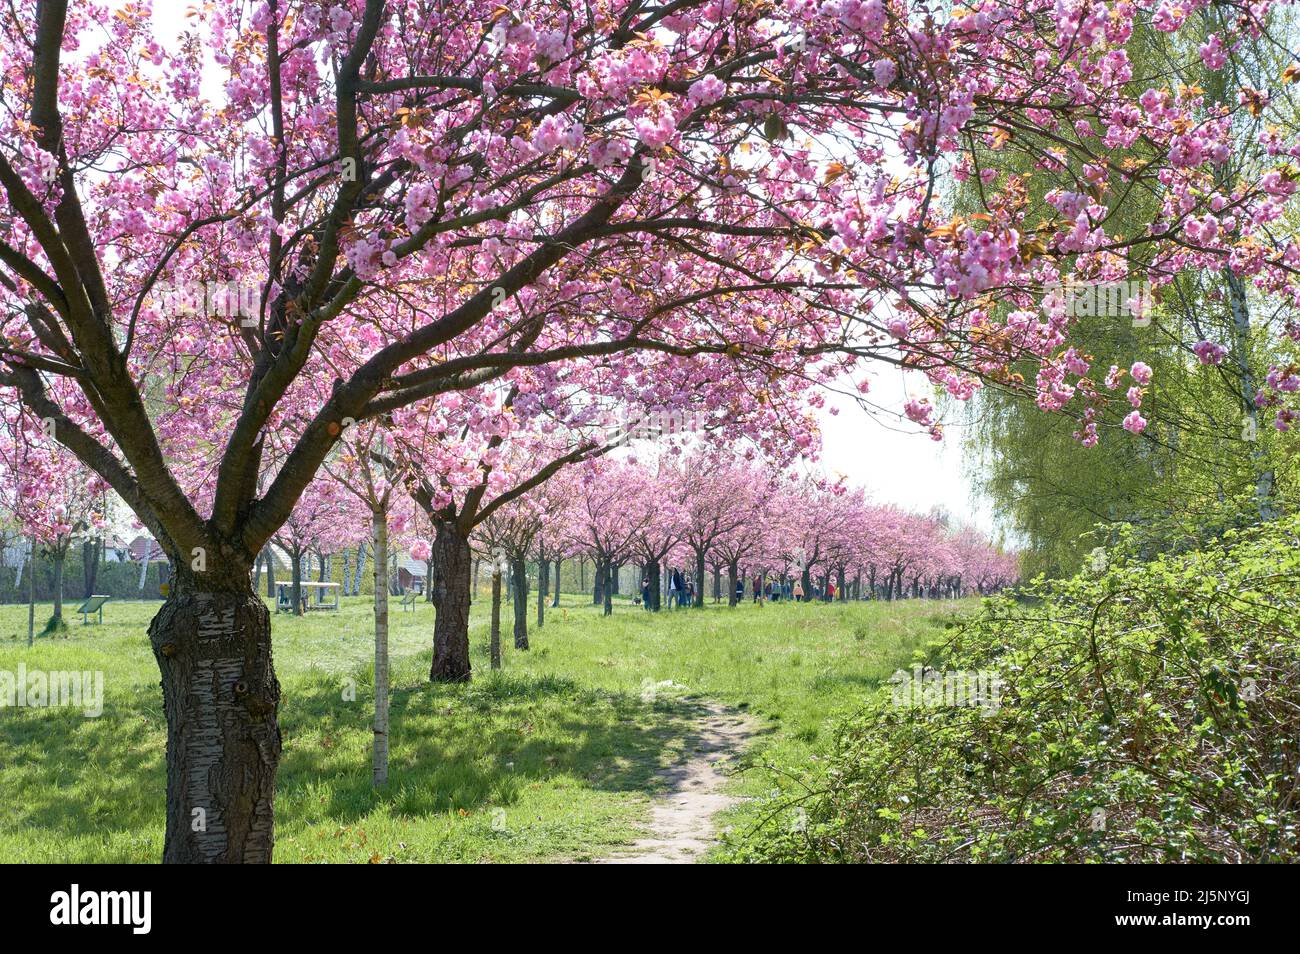 Cherry blossoms, pink sakura trees at the TV-Asahi-Alley in Teltow, Berlin, Germany Stock Photo